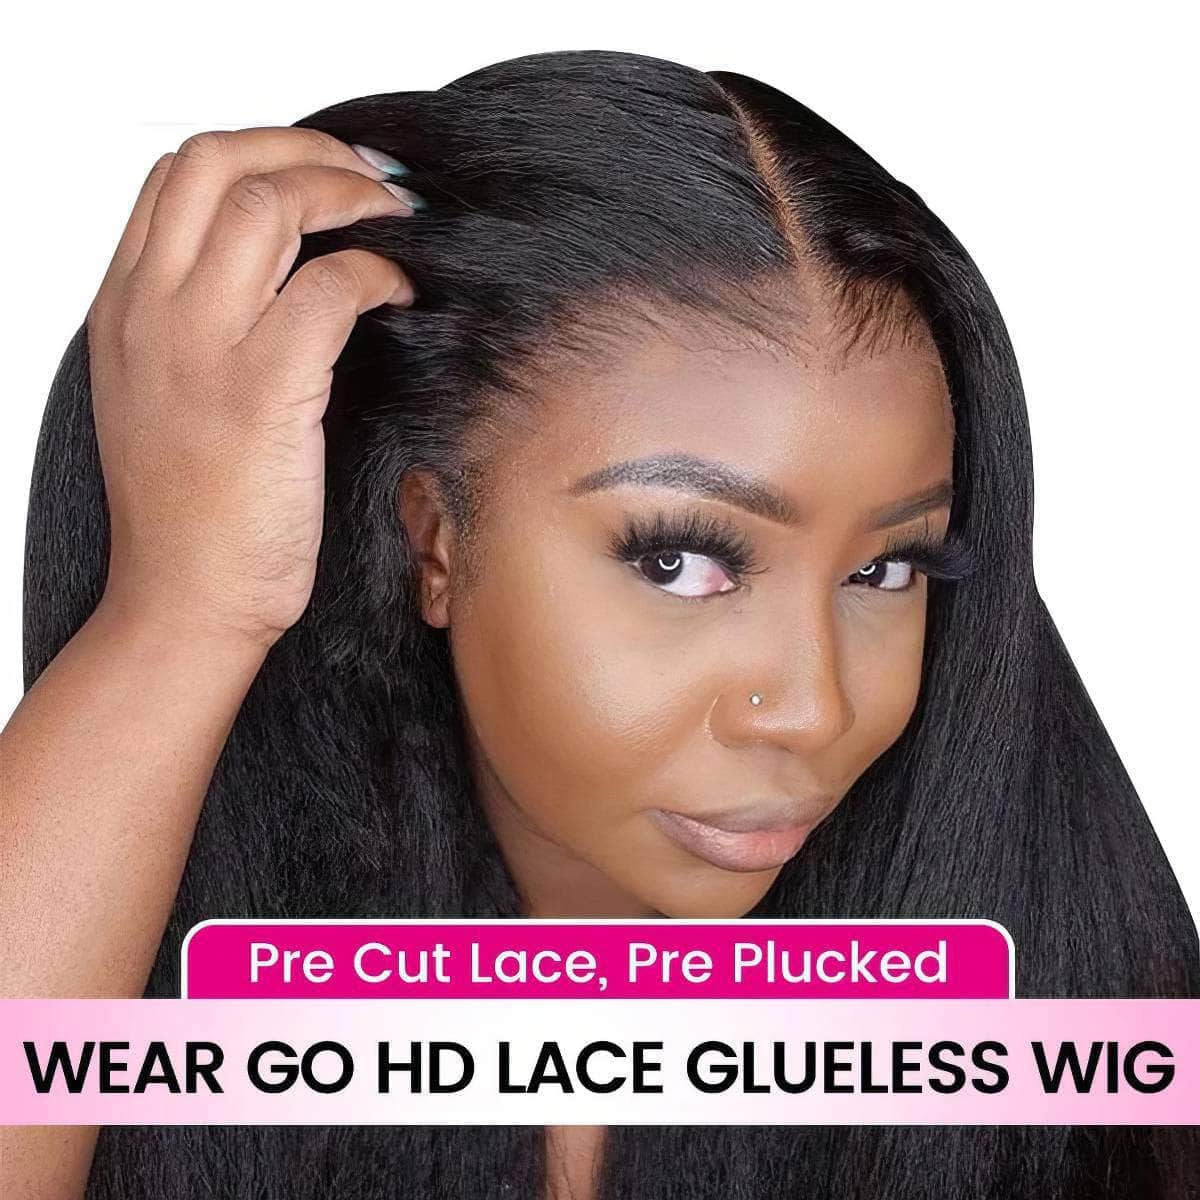 Brazilian Kinky Straight Glueless Wig - Wear And Go, 6x4 HD, 100% Human Hair, Preplucked, Ready To Go, Pre-Cut, No Glue 12inches